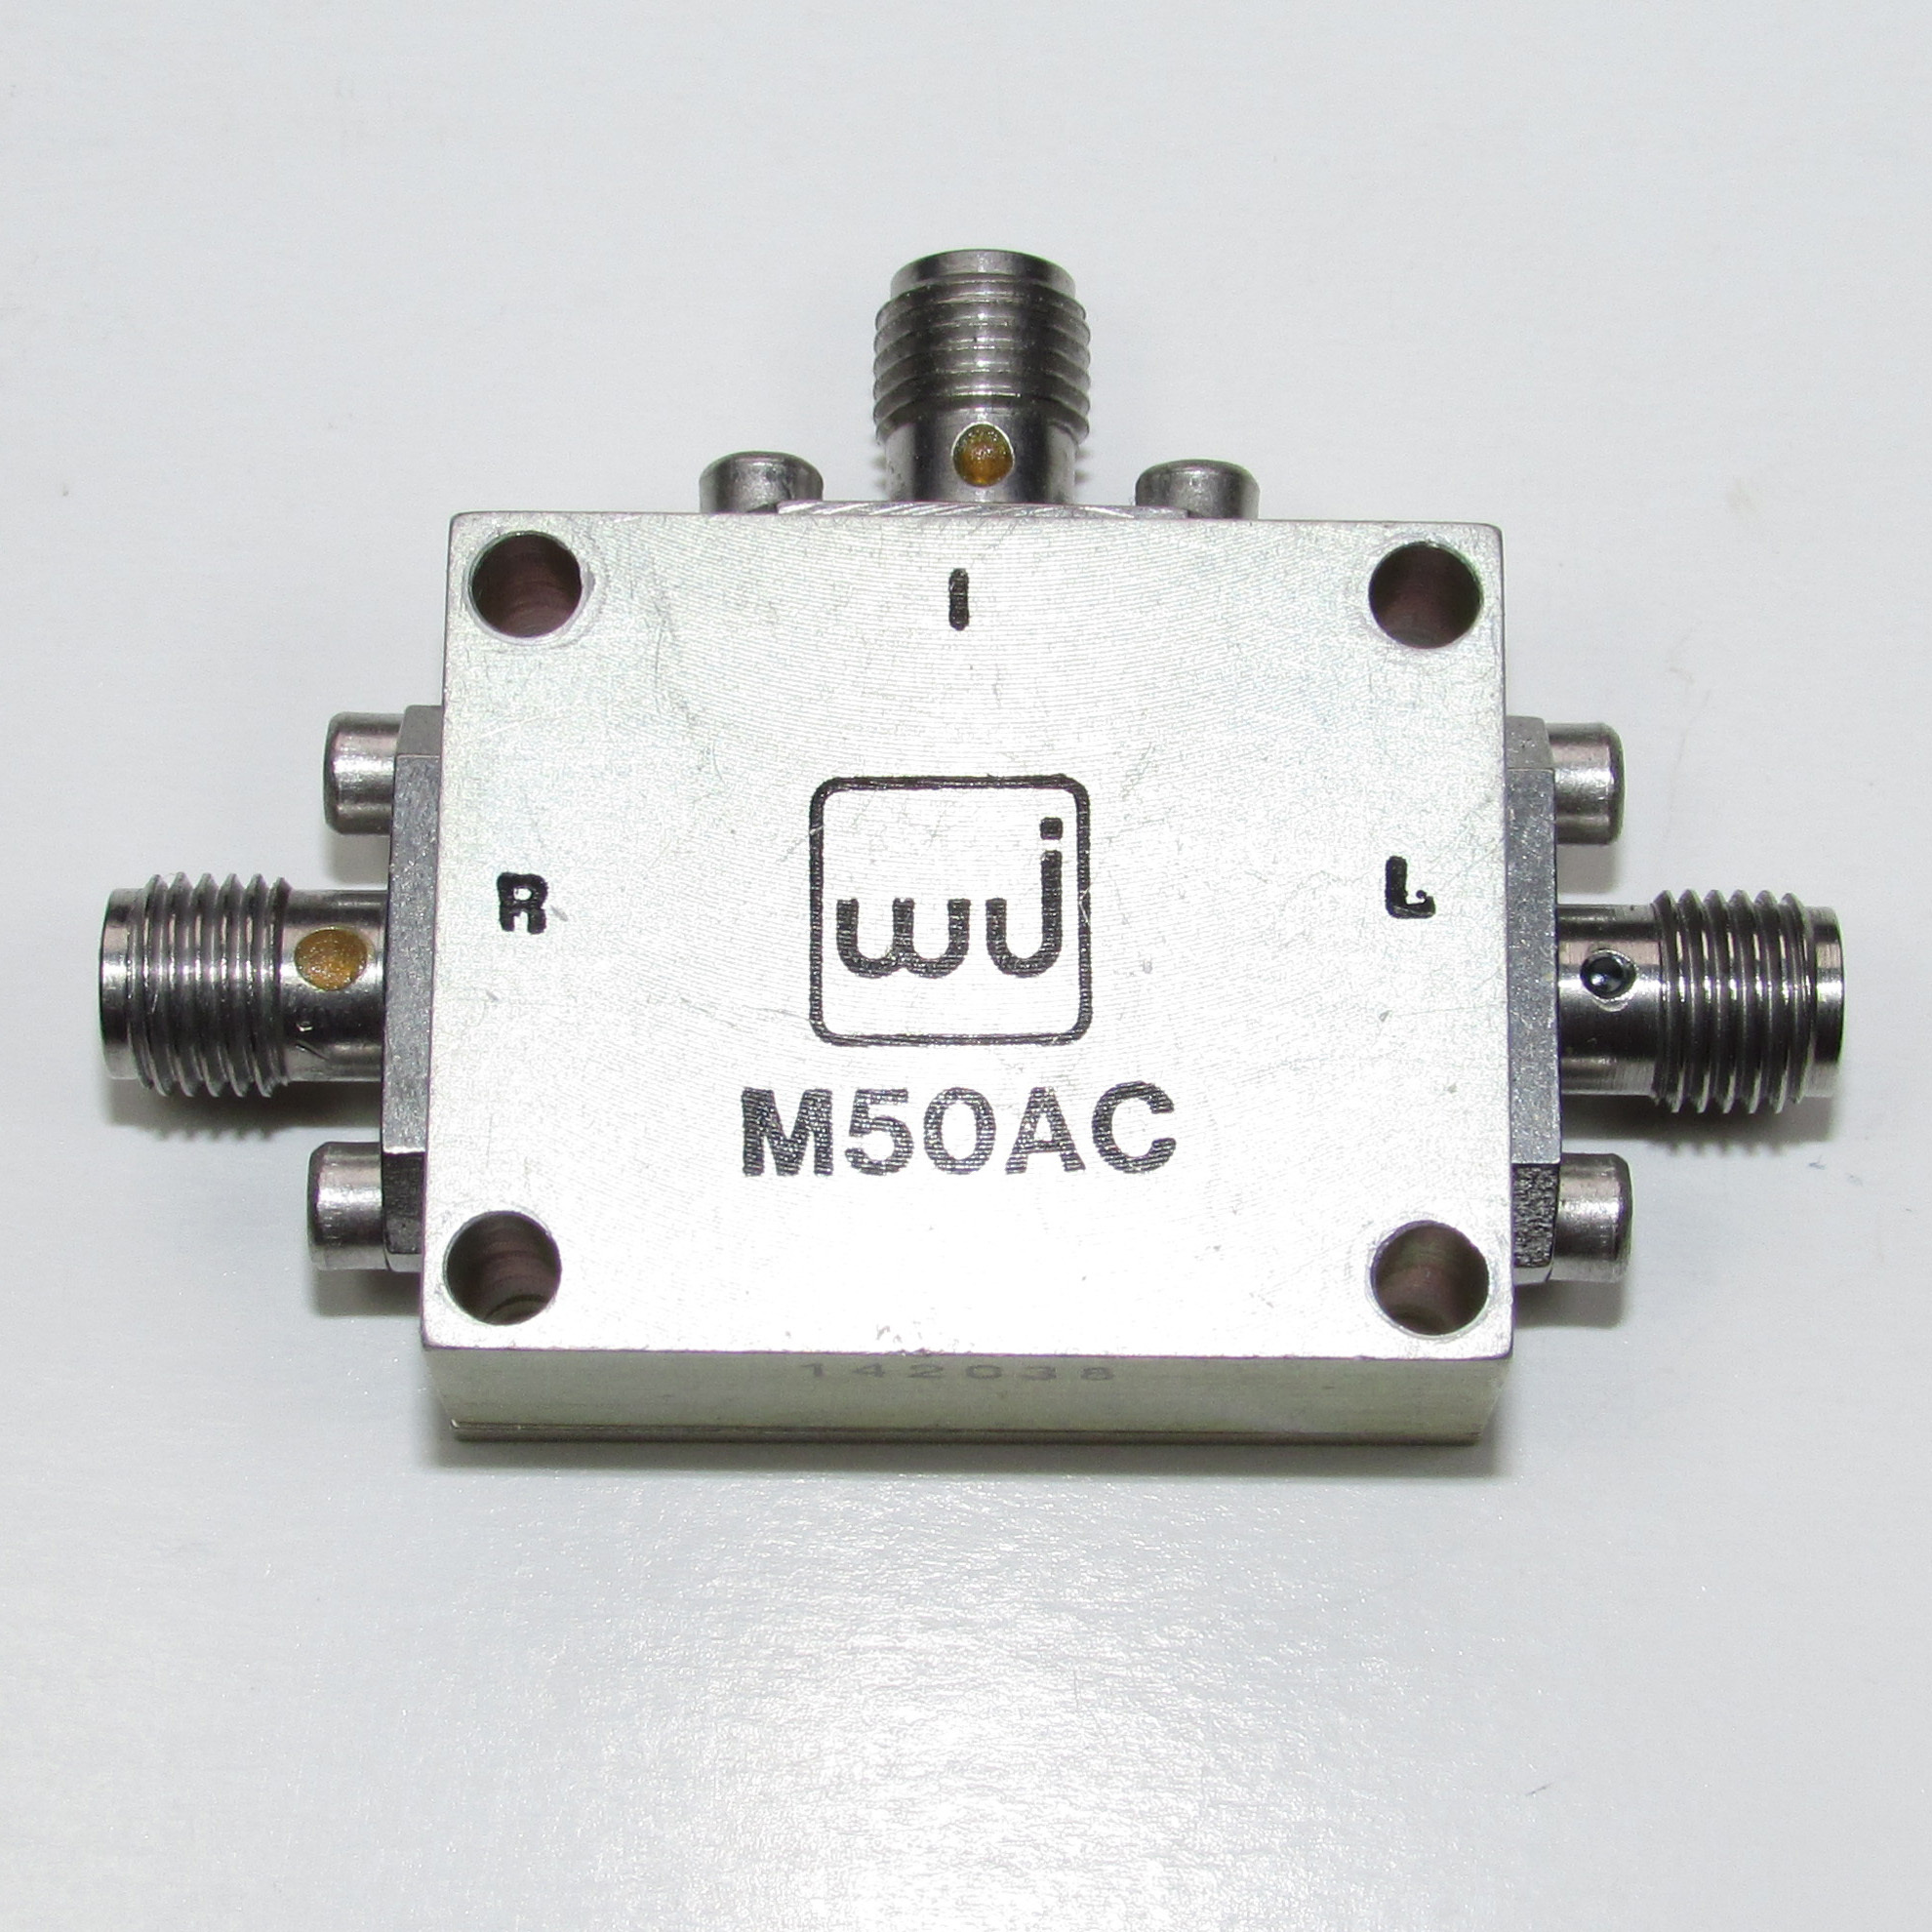 United States MACOM M50AC 2-26GHz SMA RF Microwave Coaxial Triple Balance Ultra Wideband Mixer